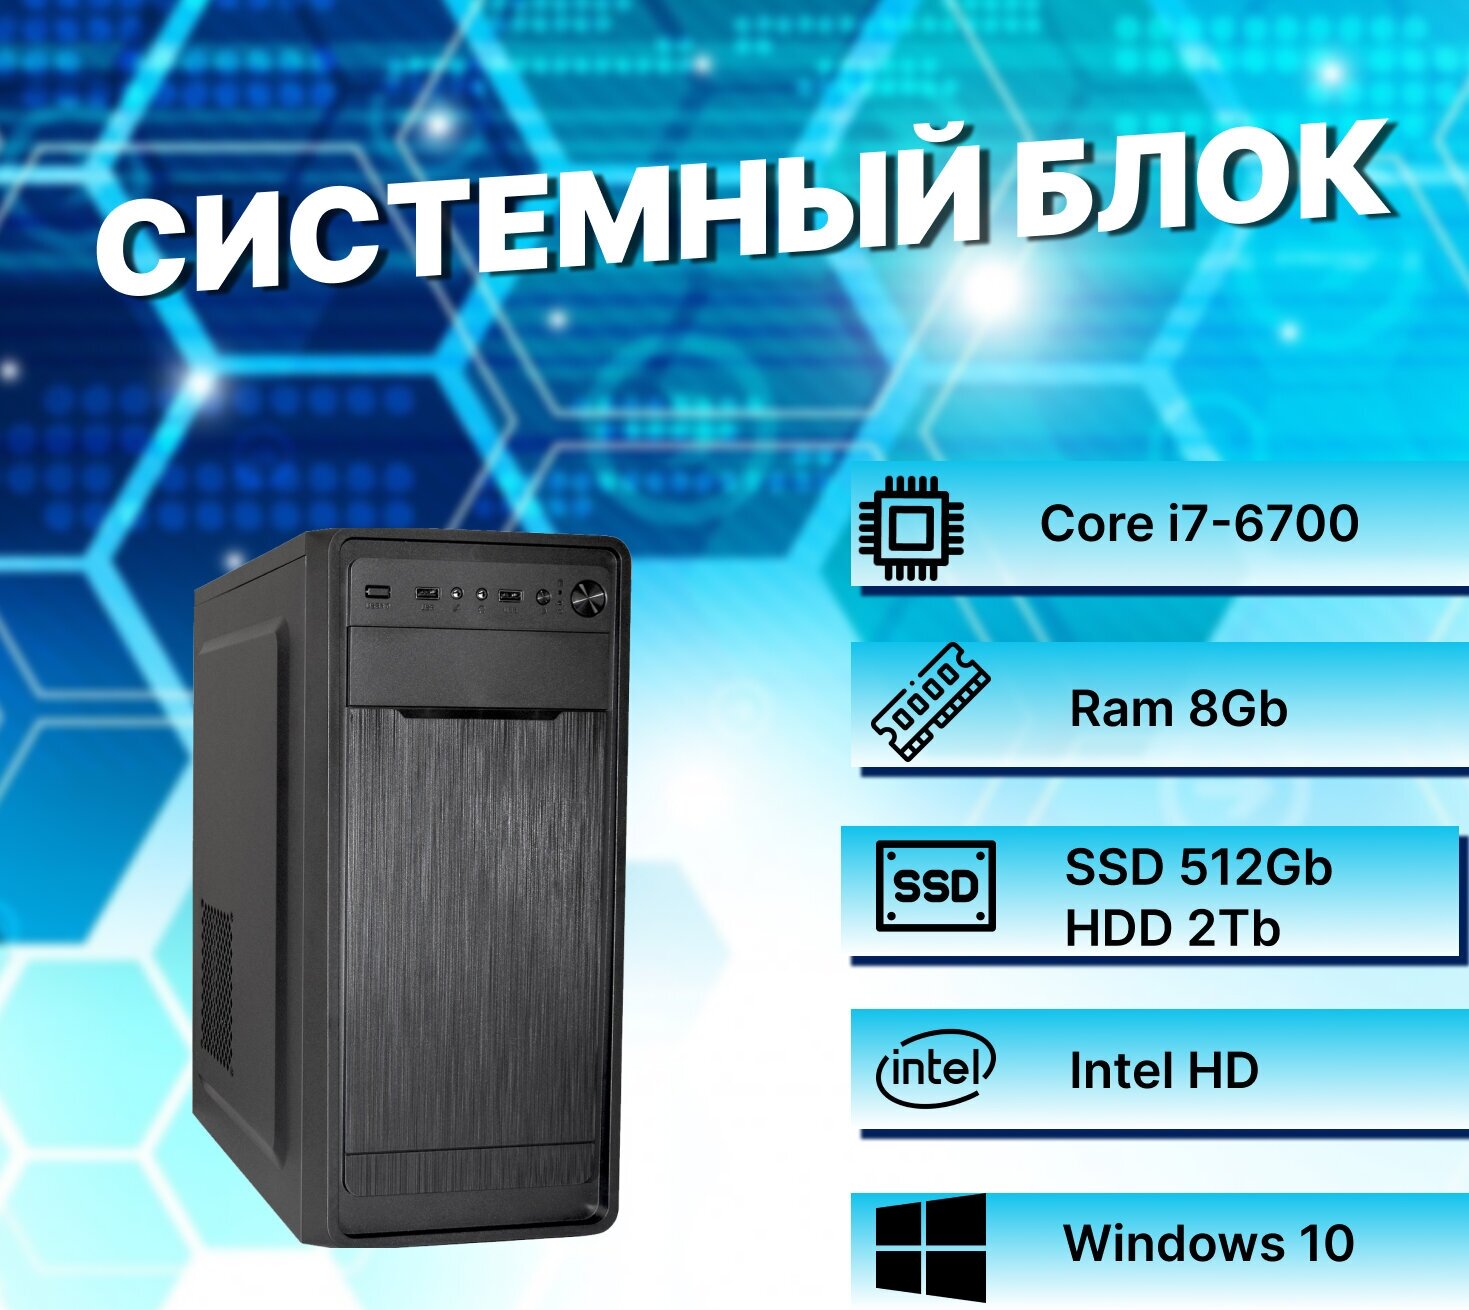 Системный блок Intel Core I7-6700 (3.4ГГц)/ RAM 8Gb/ SSD 512Gb/ HDD 2Tb/ Intel HD/ Windows 10 Pro